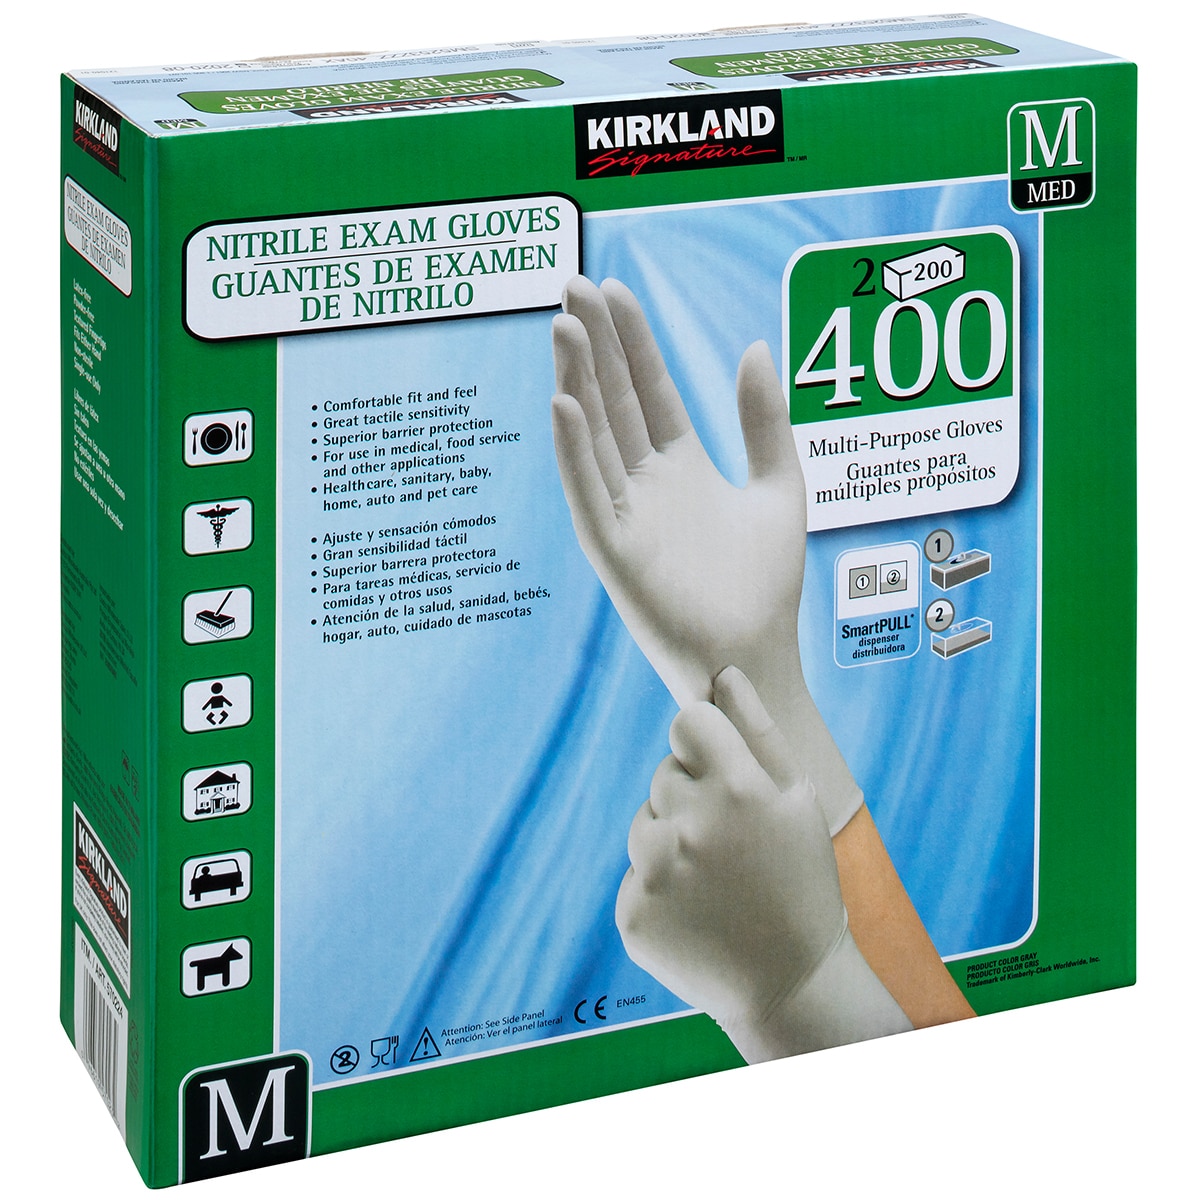 2 x 200 Gloves Latex Free Kirkland Signature Medium Nitrile Exam Gloves